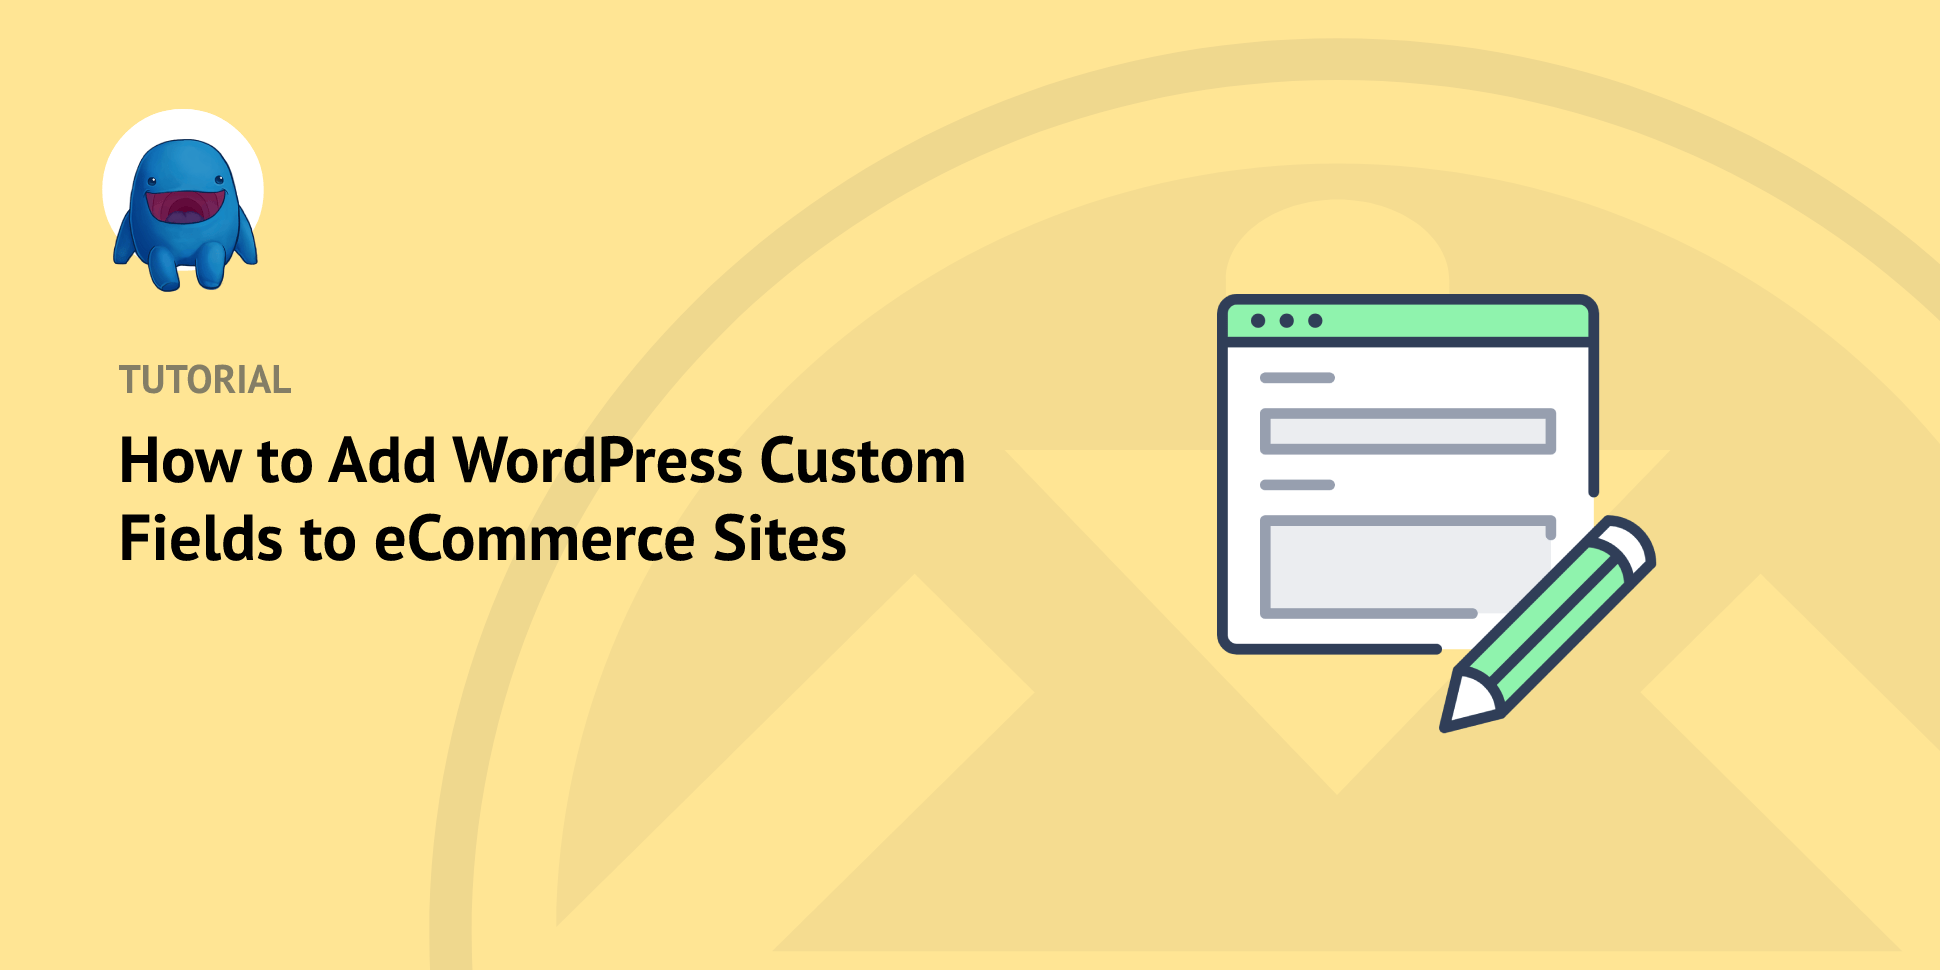 How to Add WordPress Custom Fields to eCommerce Sites